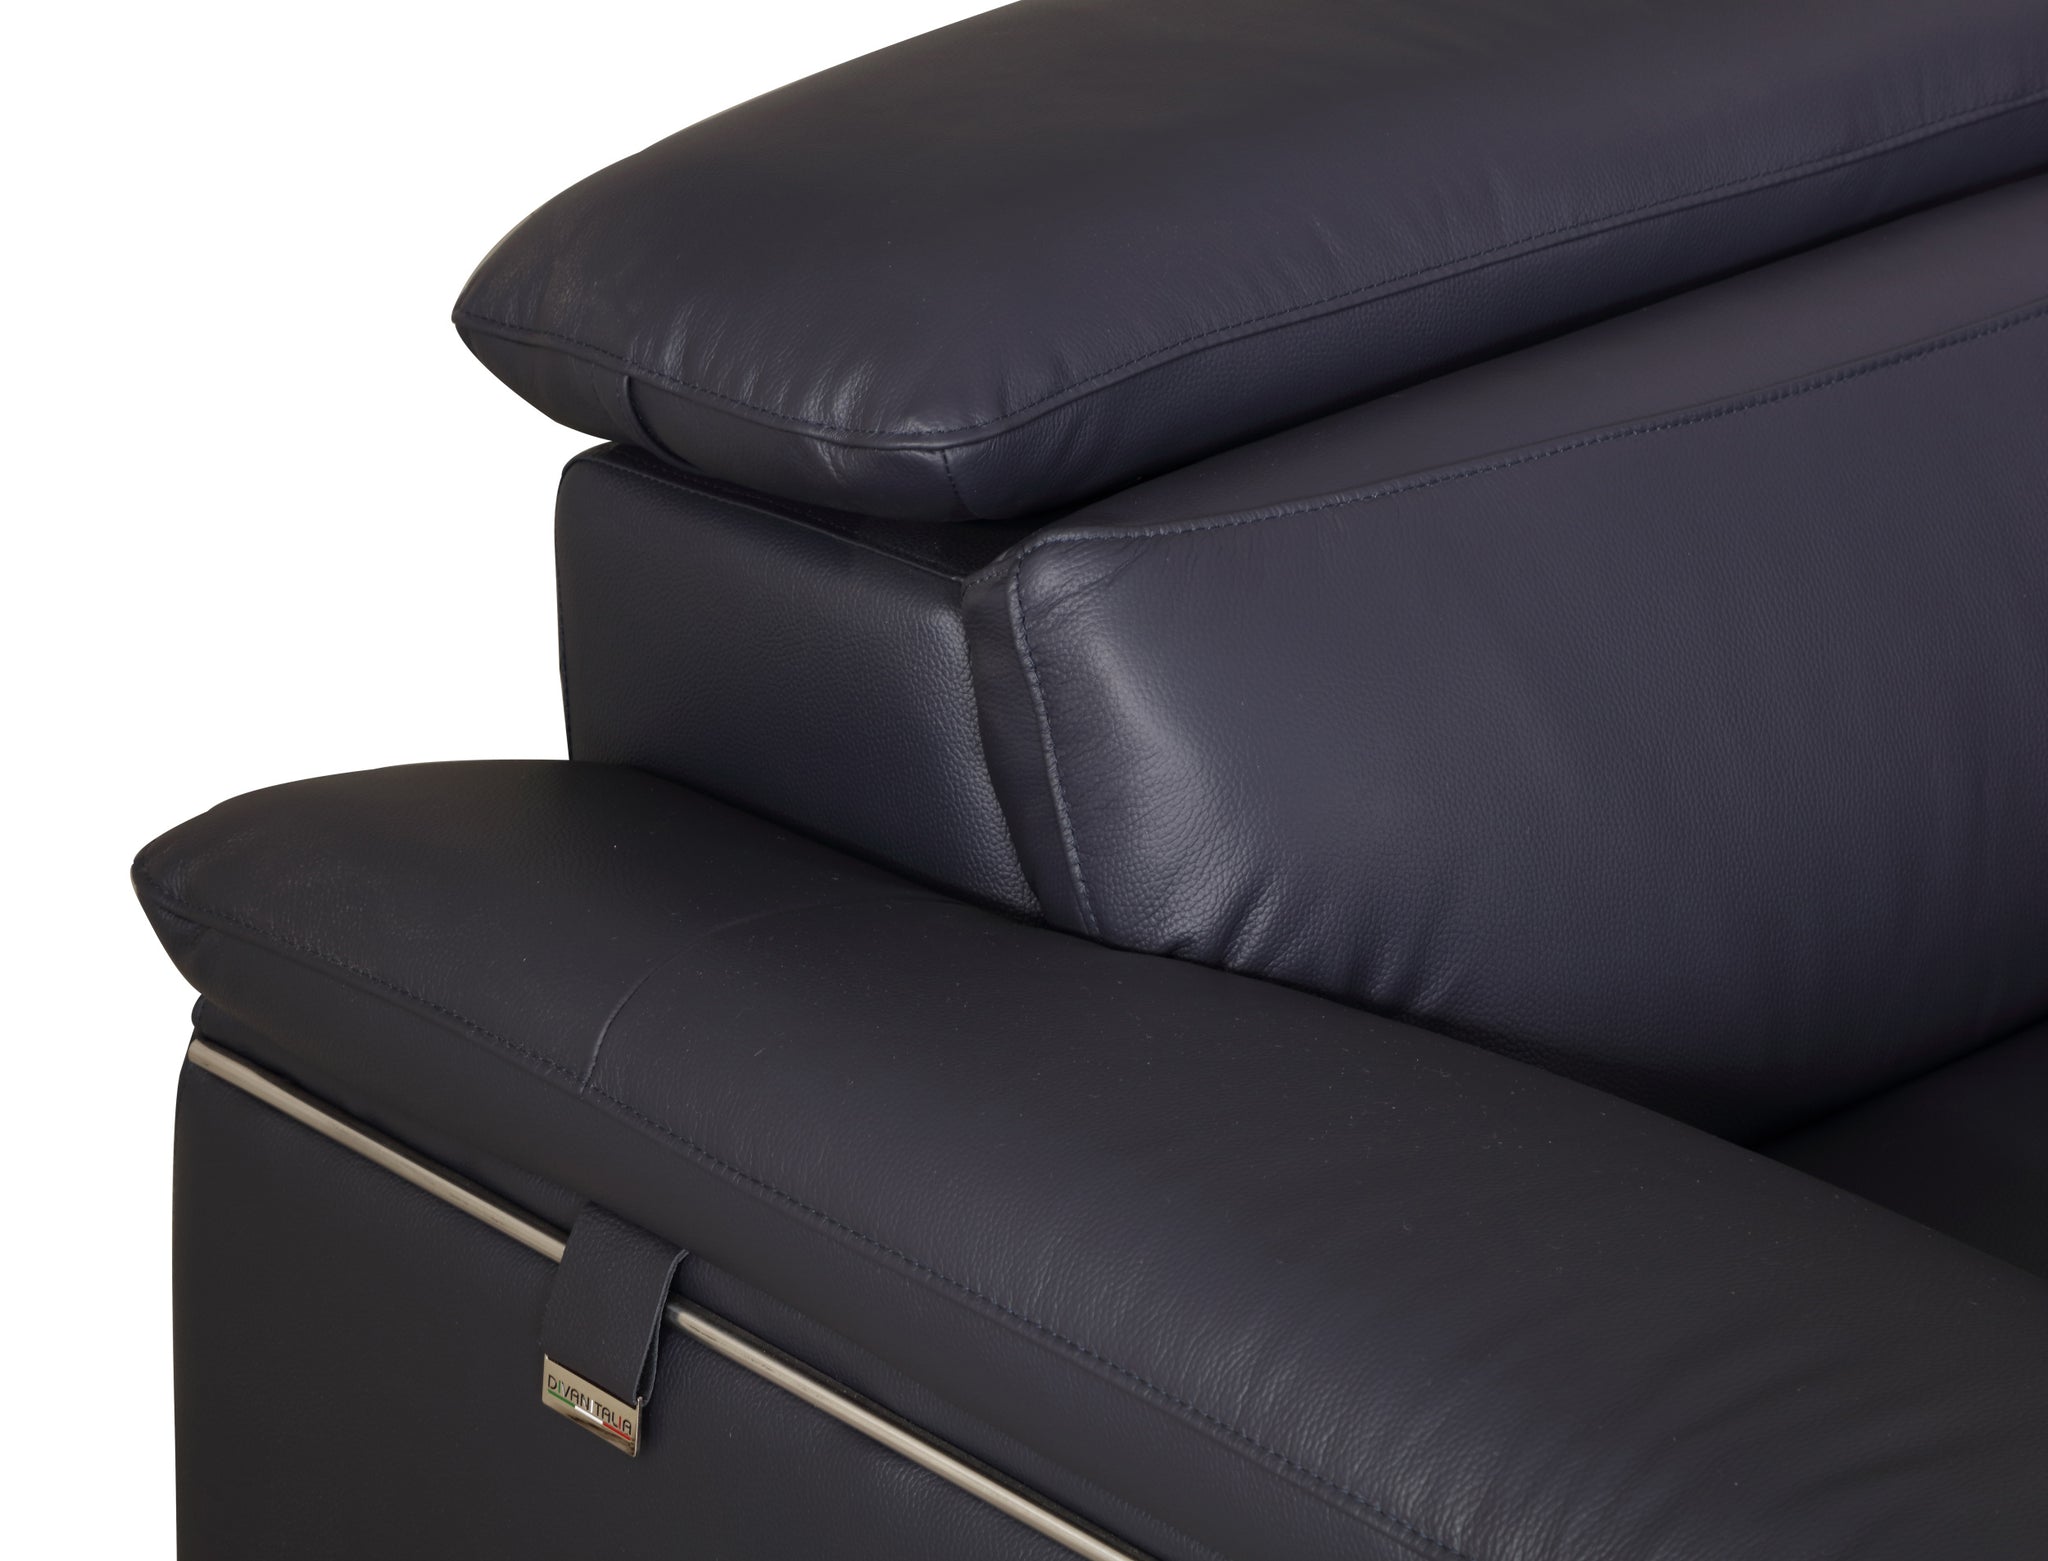 Top Grain Italian Leather Chair navy-foam-leather